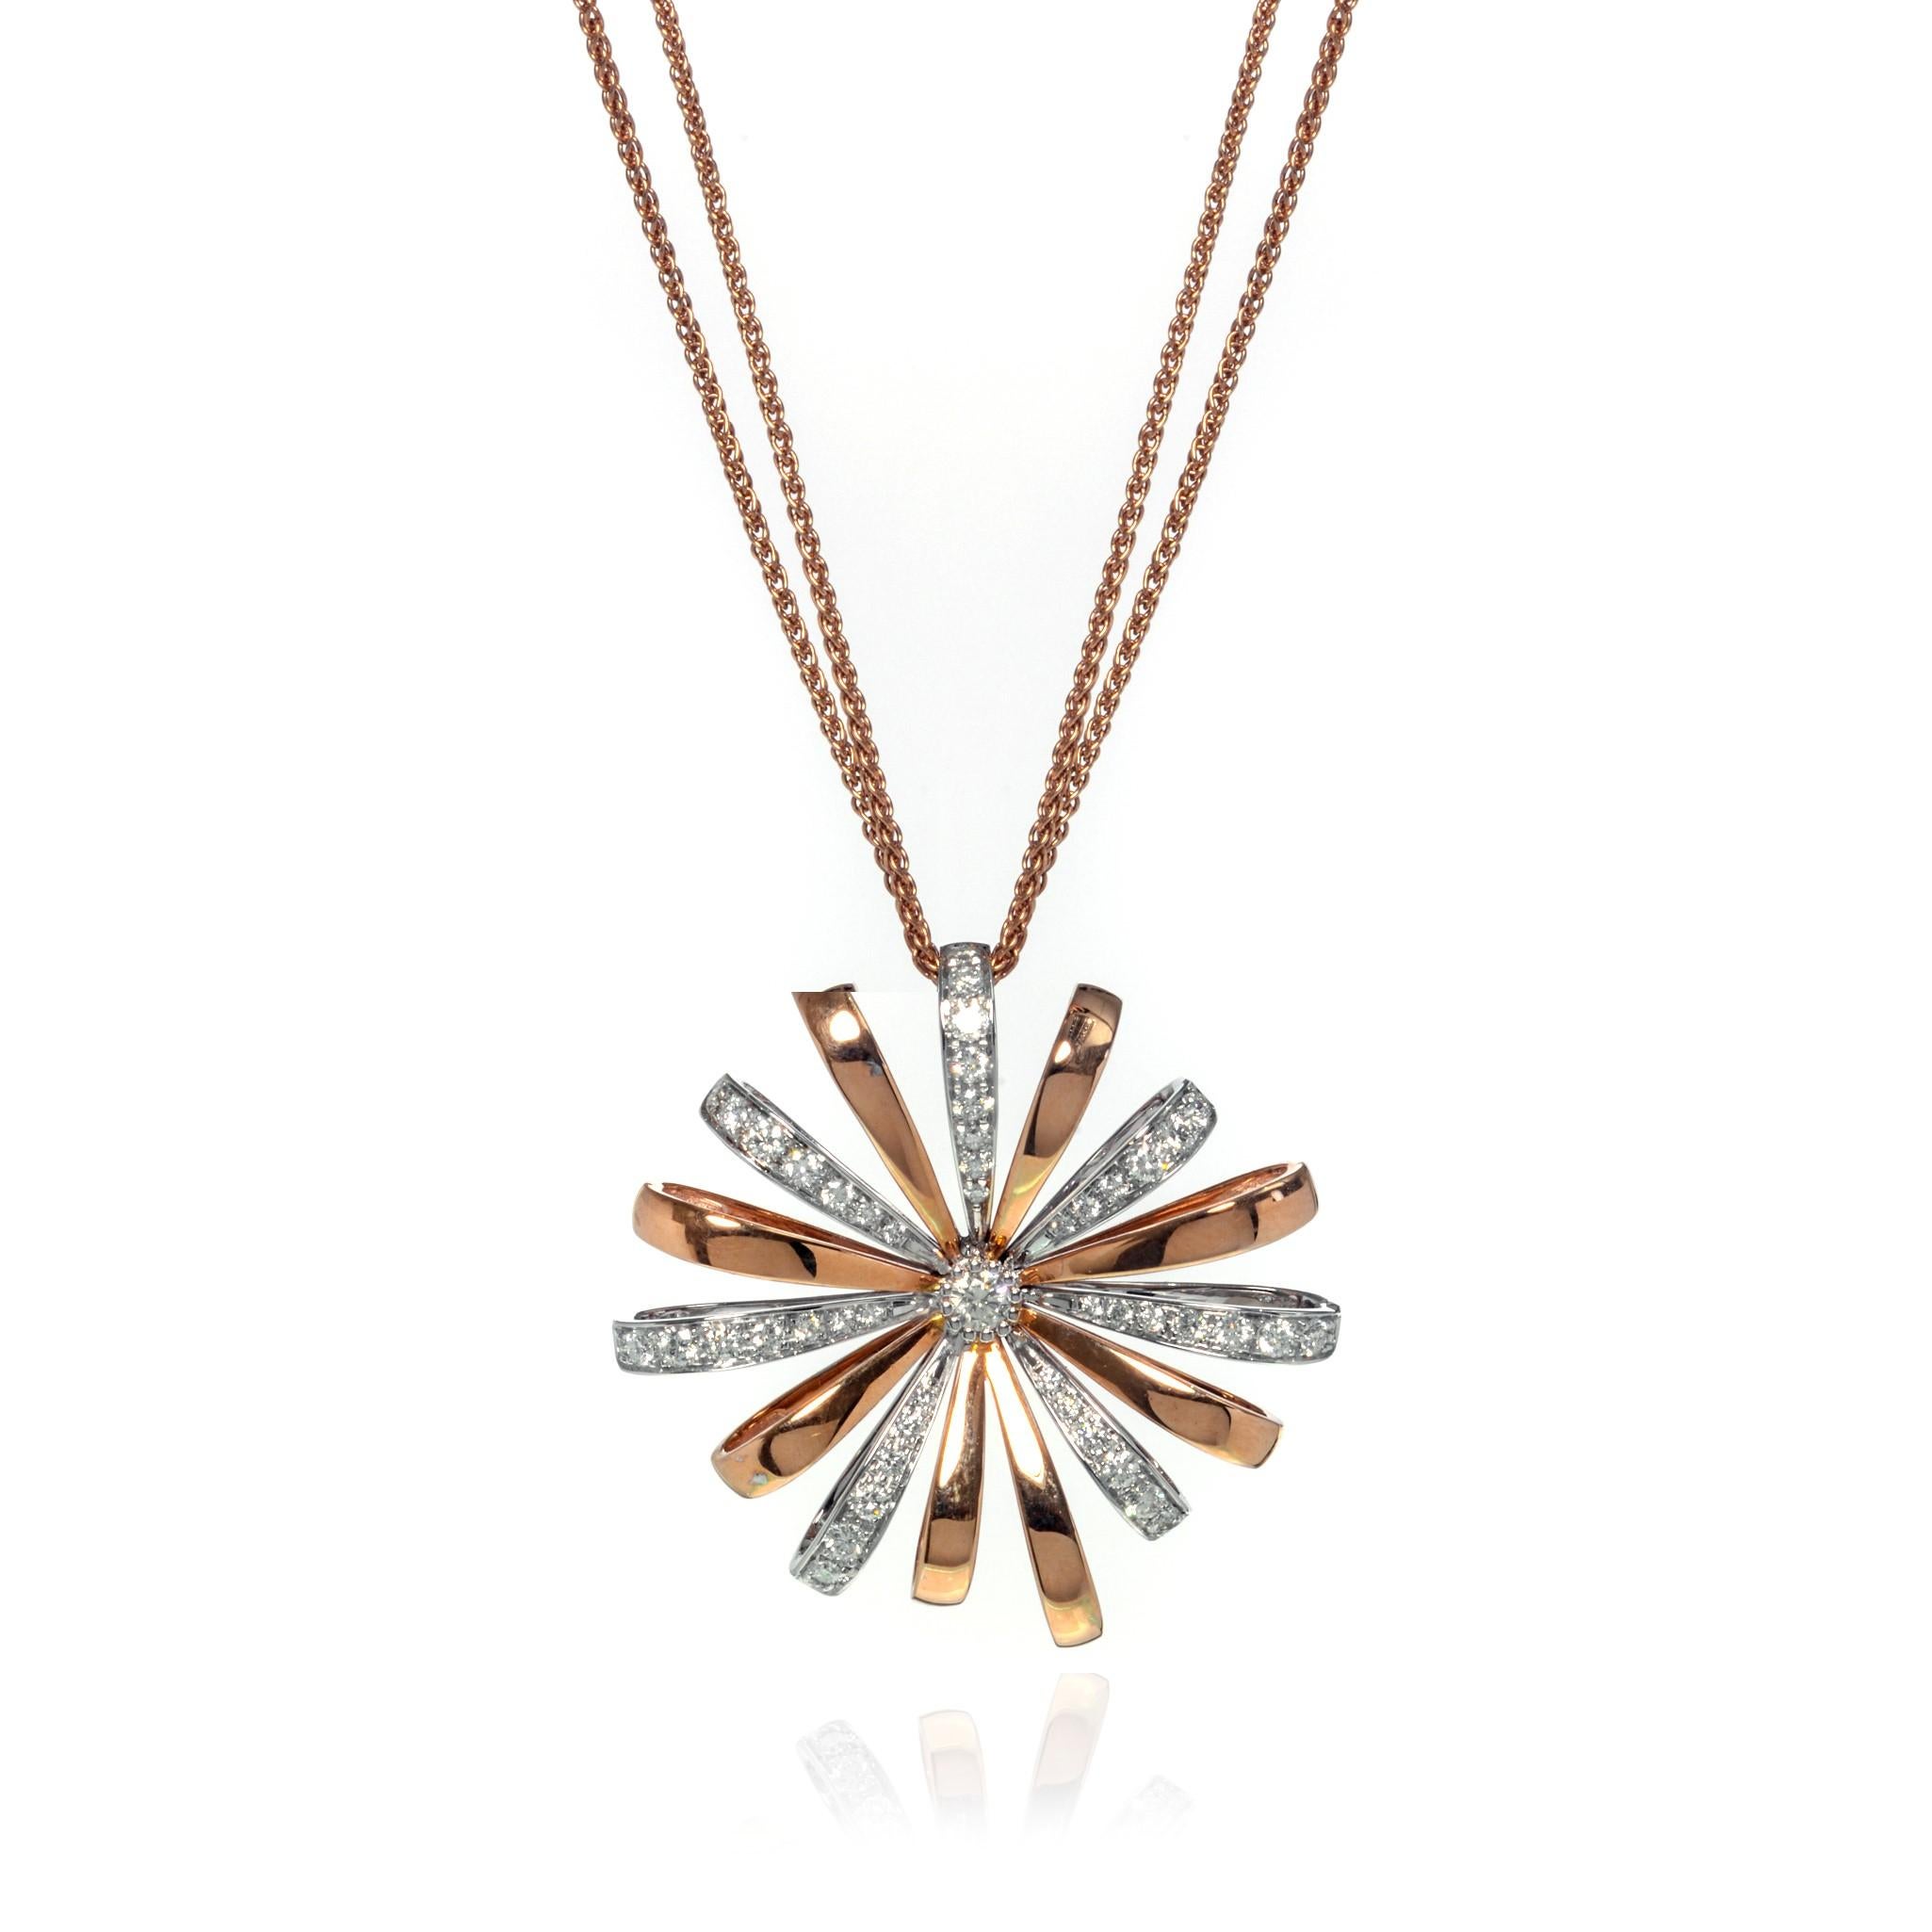 Round Cut Luca Carati Diamond Pendant Long Necklace 18K Rose & White Gold 1.28Cttw For Sale